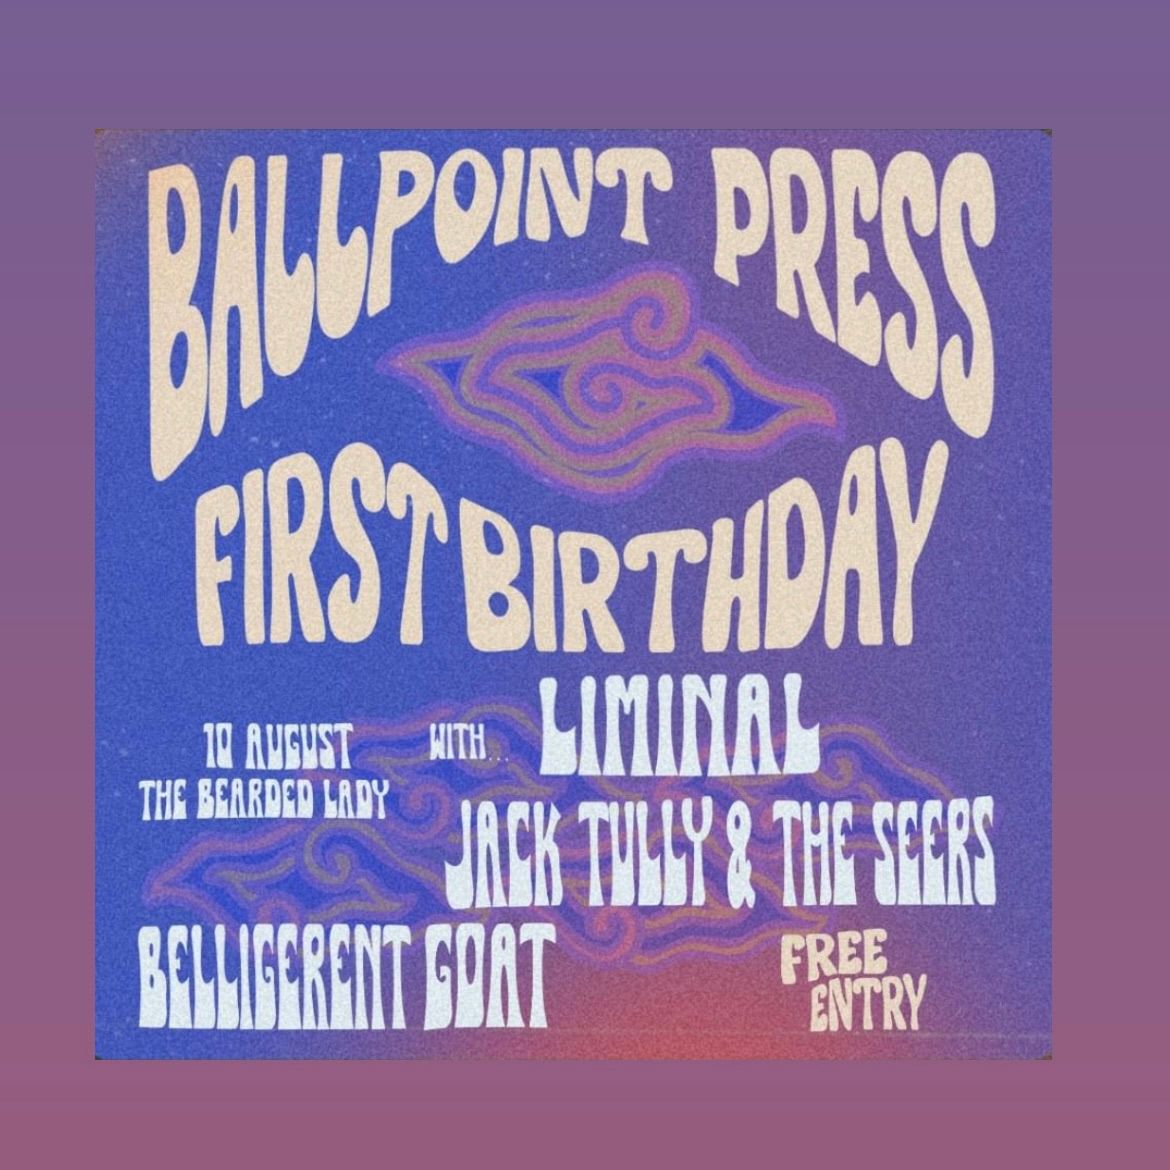 BALLPOINT PRESS 1ST BIRTHDAY